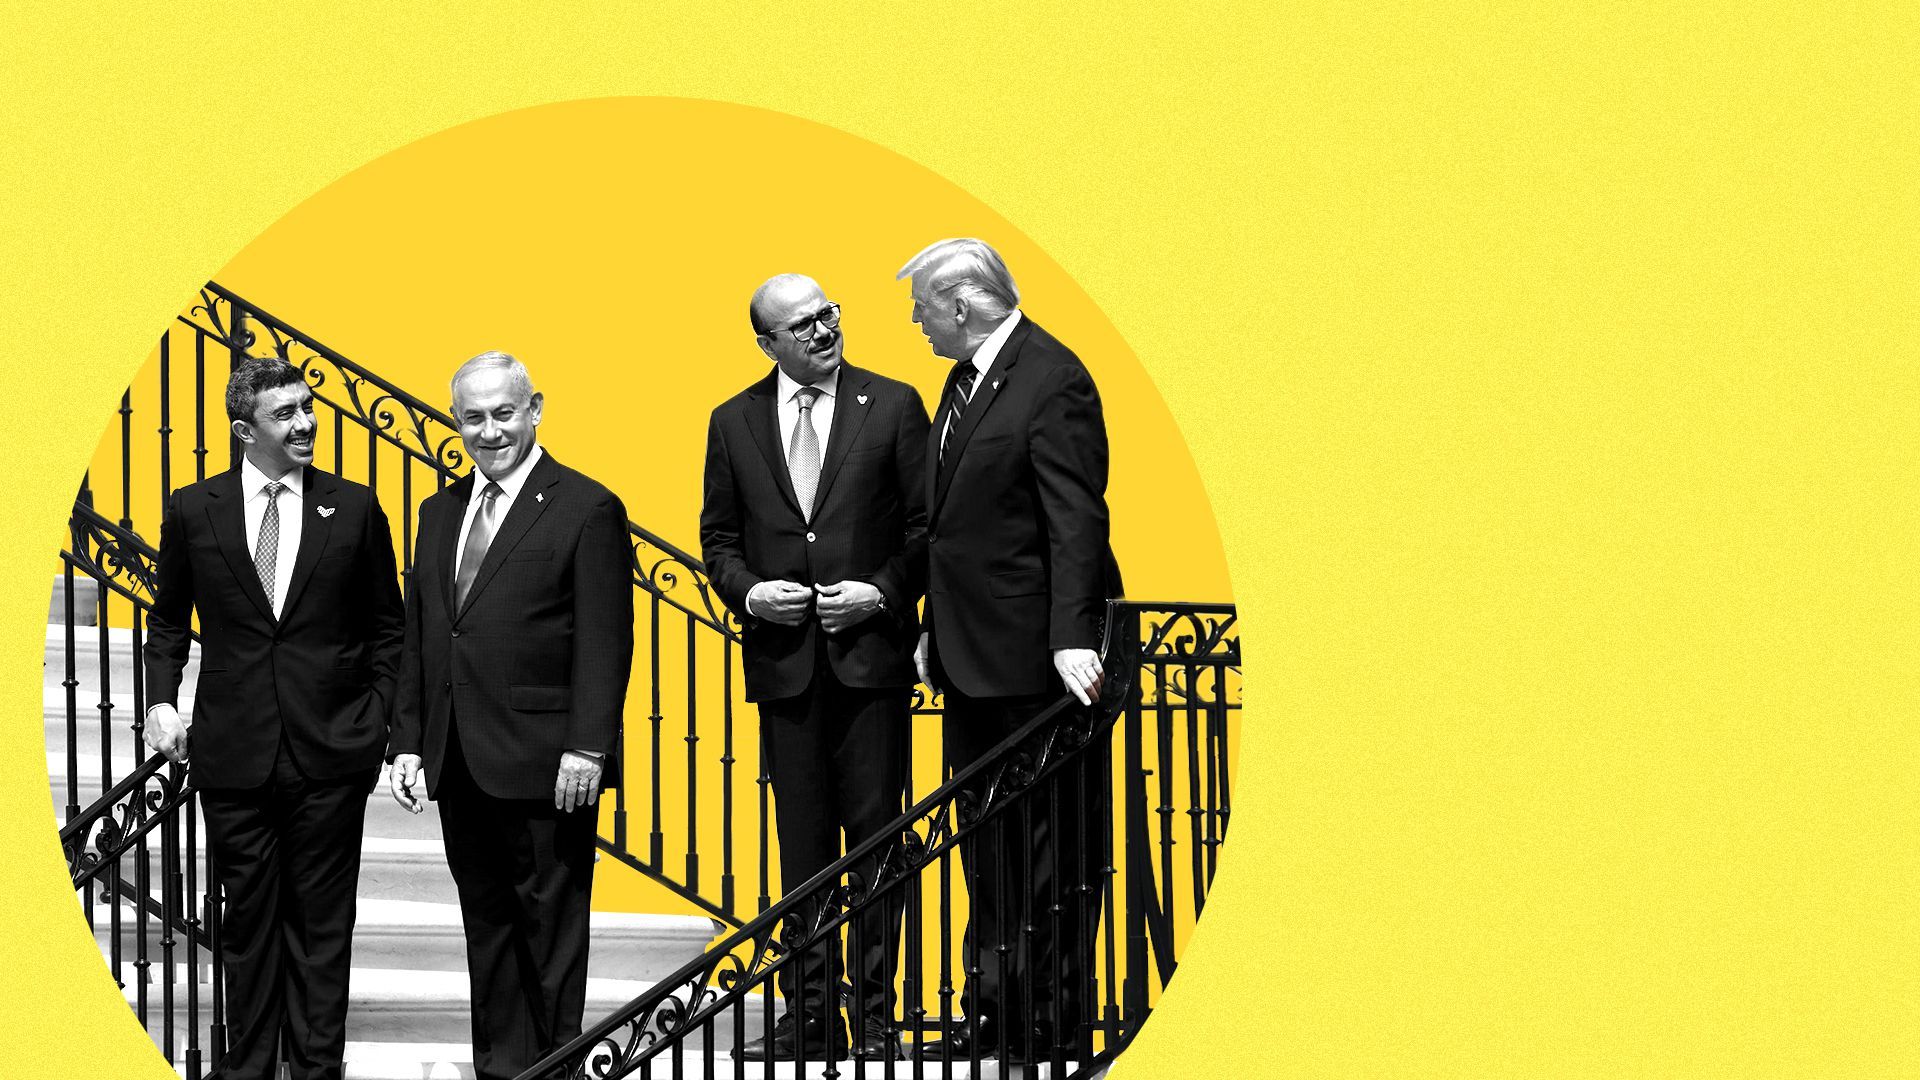 Photo illustration of Abdullah bin Zayed Al Nahyan, Benjamin Netanyahu, Abdullatif bin Rashid Al Zayani, and Donald Trump on stairs at the White House enclosed in a circle graphic.